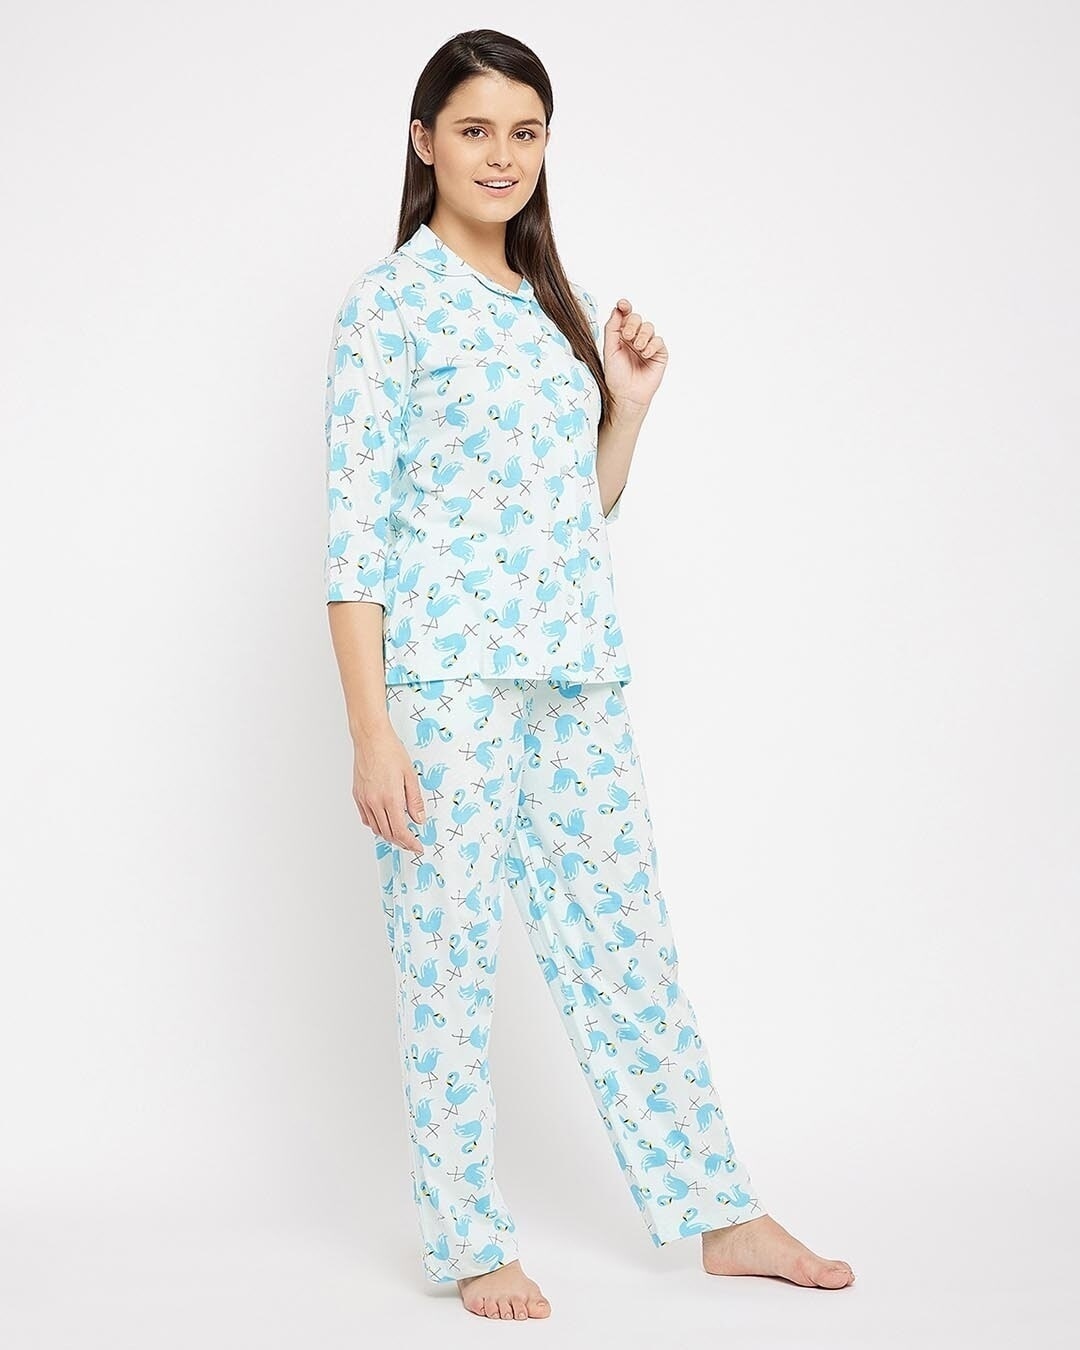 Shop Women's Blue Printed Top & Pyjama Set (Pack of 2)